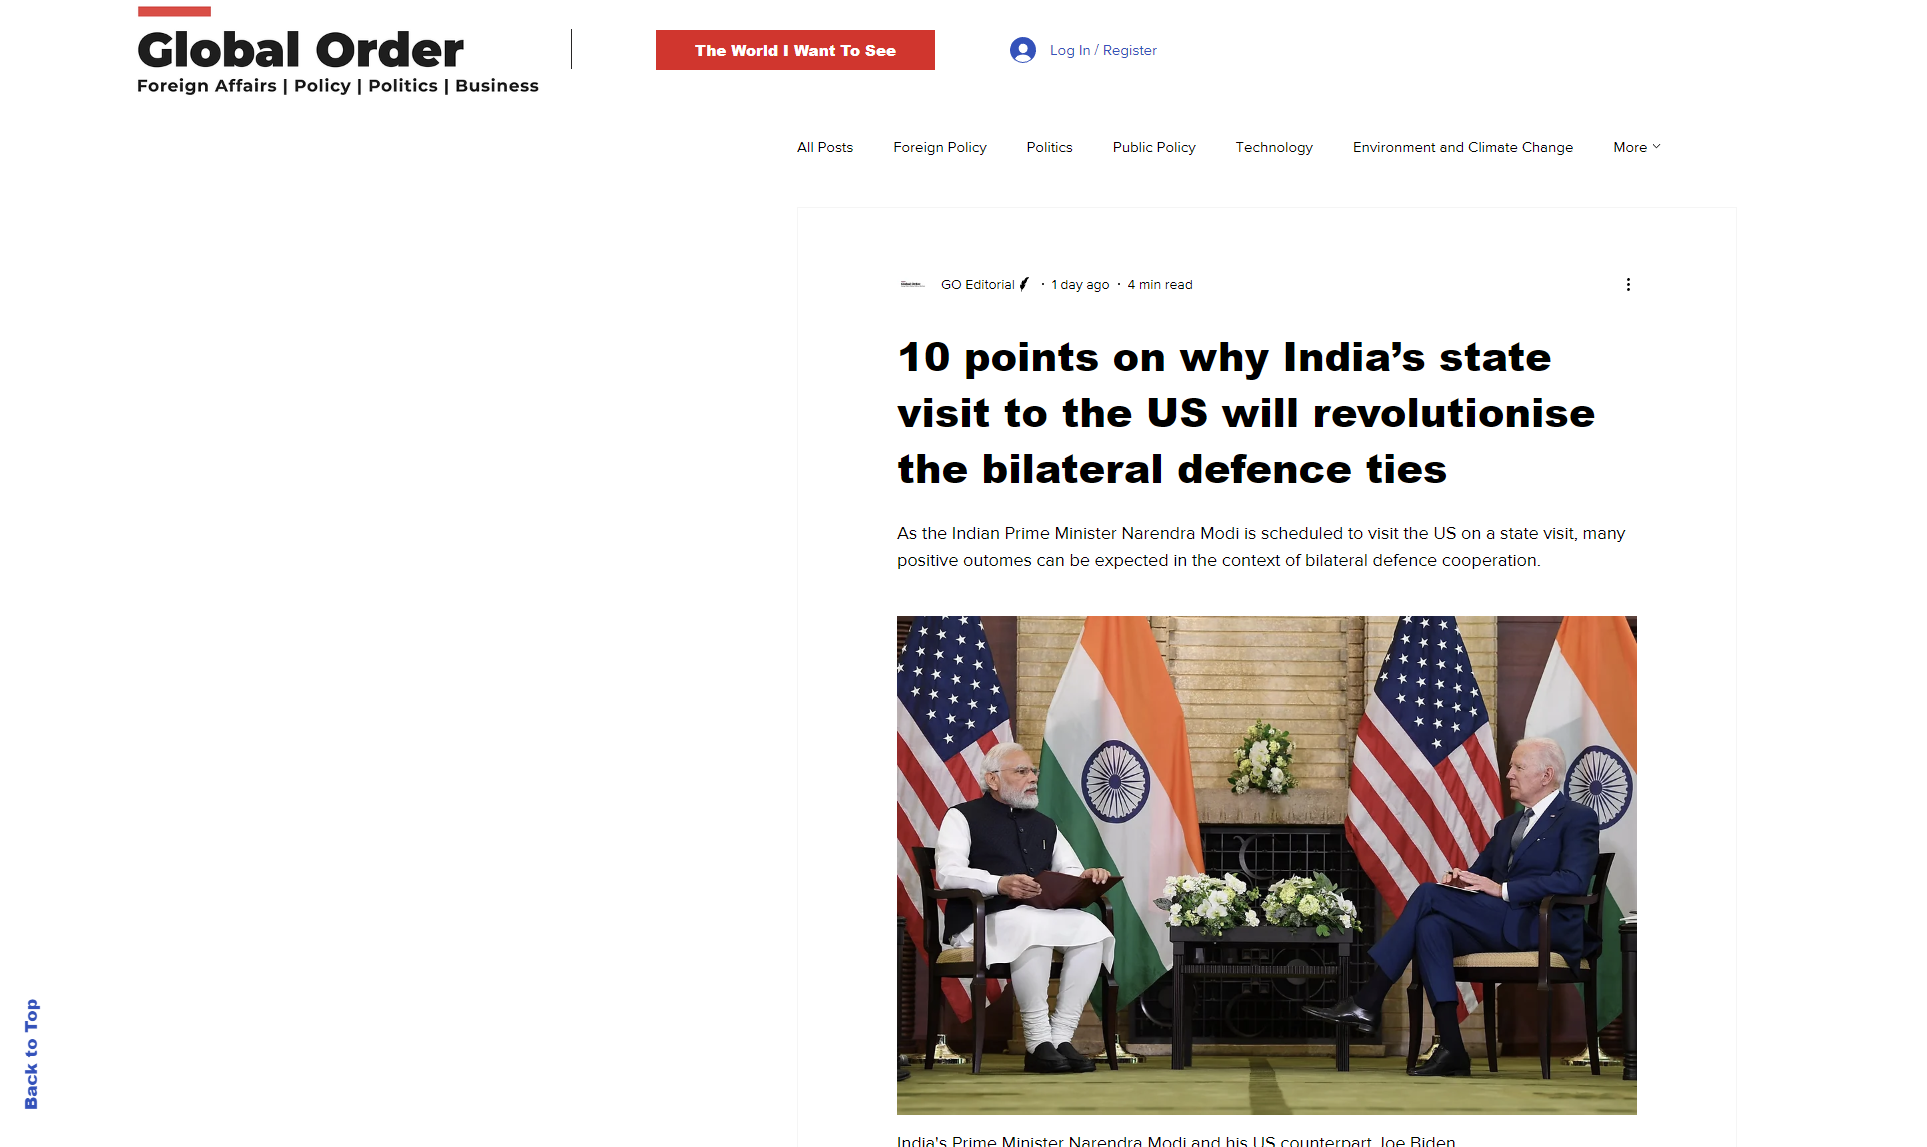 Global Order: 10 σημεία που εξηγούν γιατί η επίσκεψη Μόντι στον Λευκό Οίκο θα φέρει επανάσταση στους διμερείς αμυντικούς δεσμούς – Συμφωνία ύψους 25 δις δολαρίων μεταξύ ΗΠΑ και Ινδίας στον αμυντικό τομέα